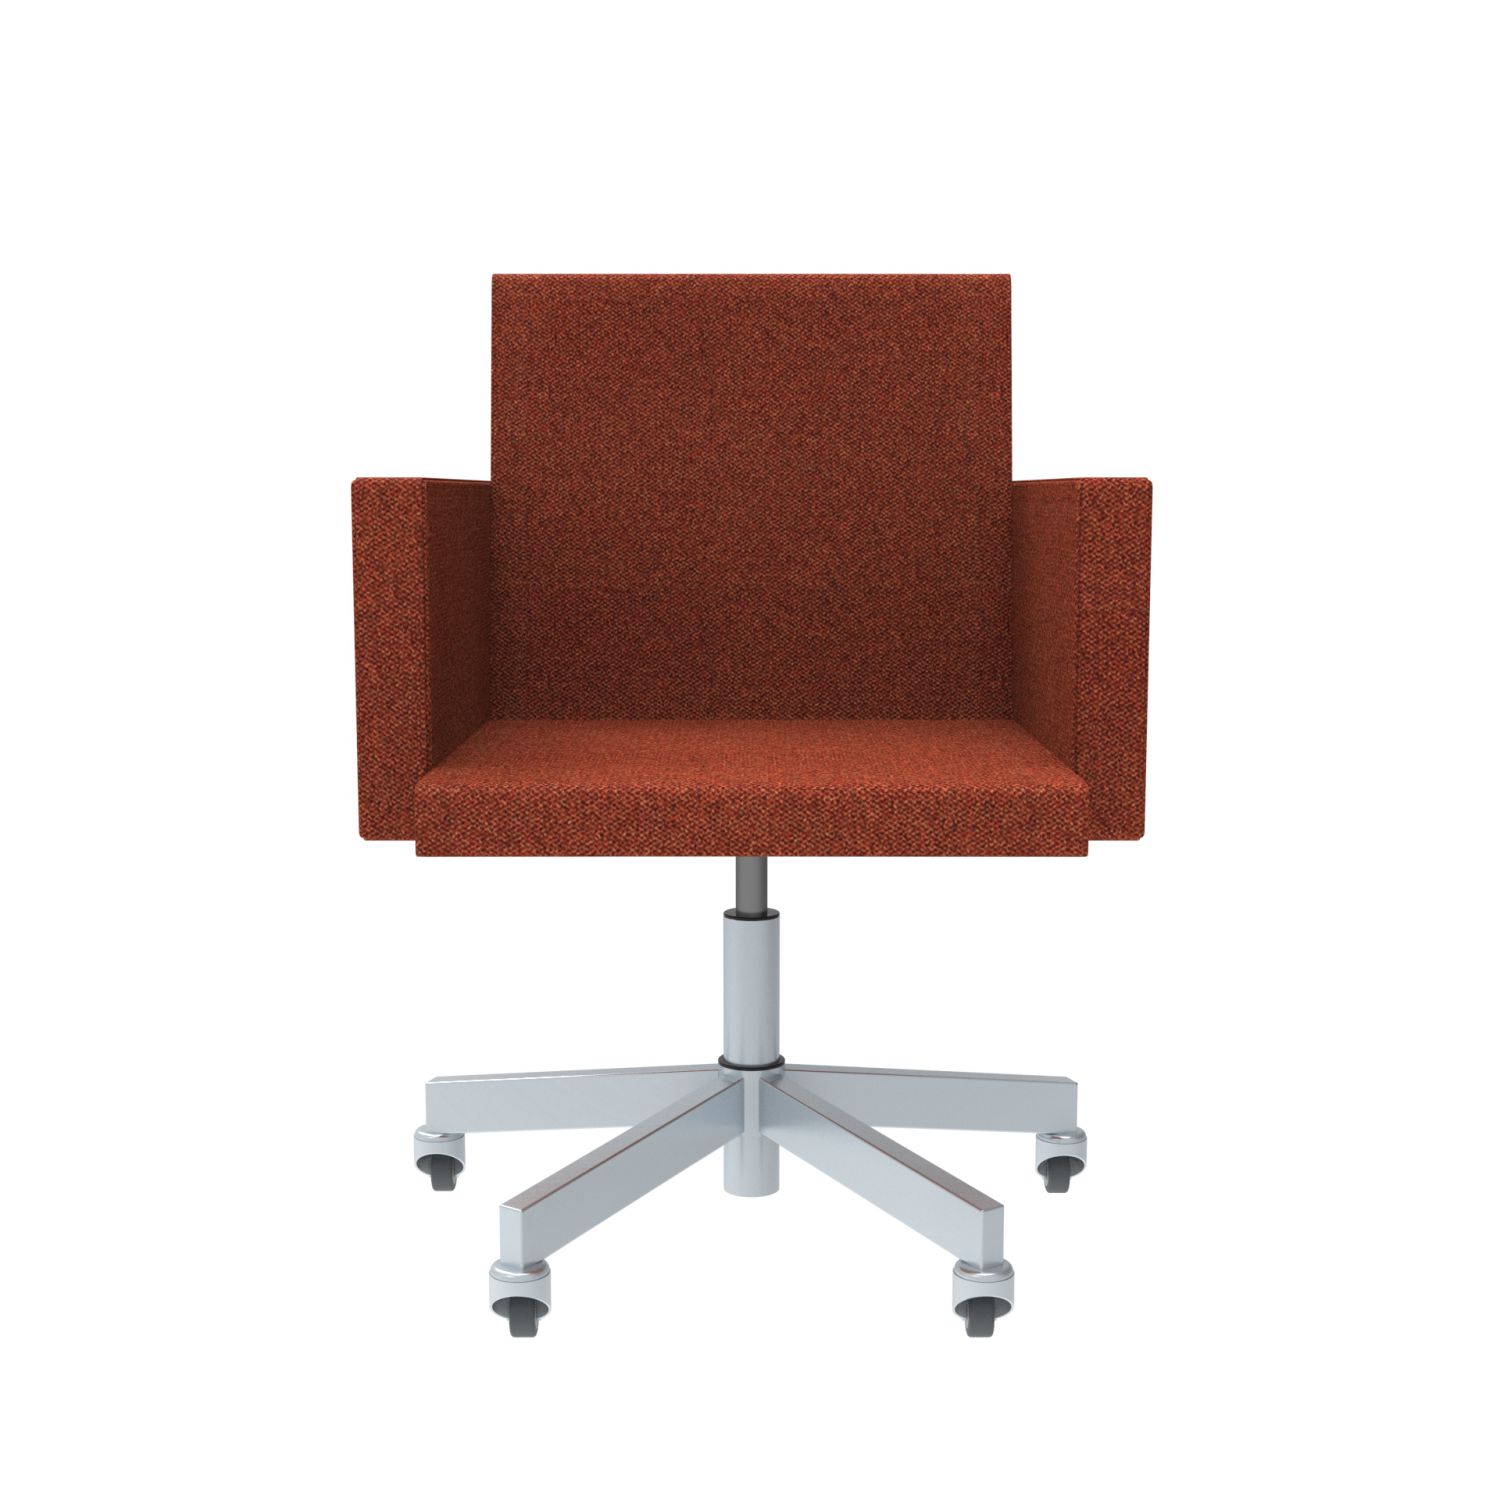 lensvelt atelier van lieshout office chair with armrests moss clay brown 65 galvanized soft rolls